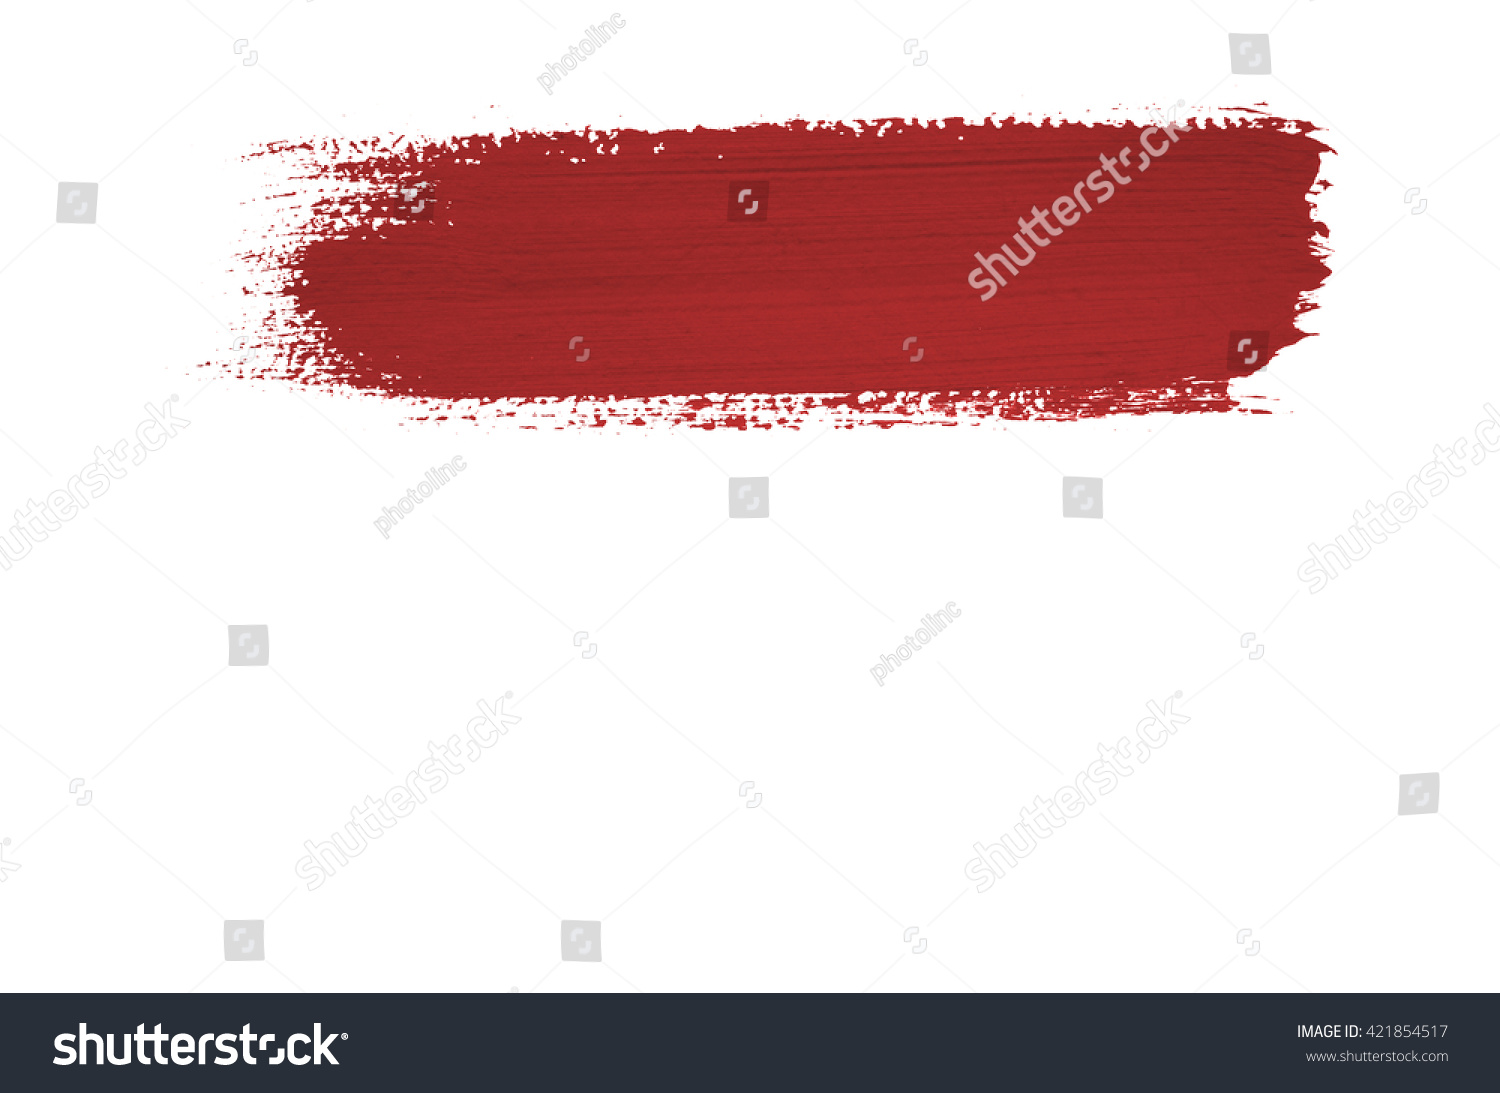 Red brush stroke isolated on white background #421854517